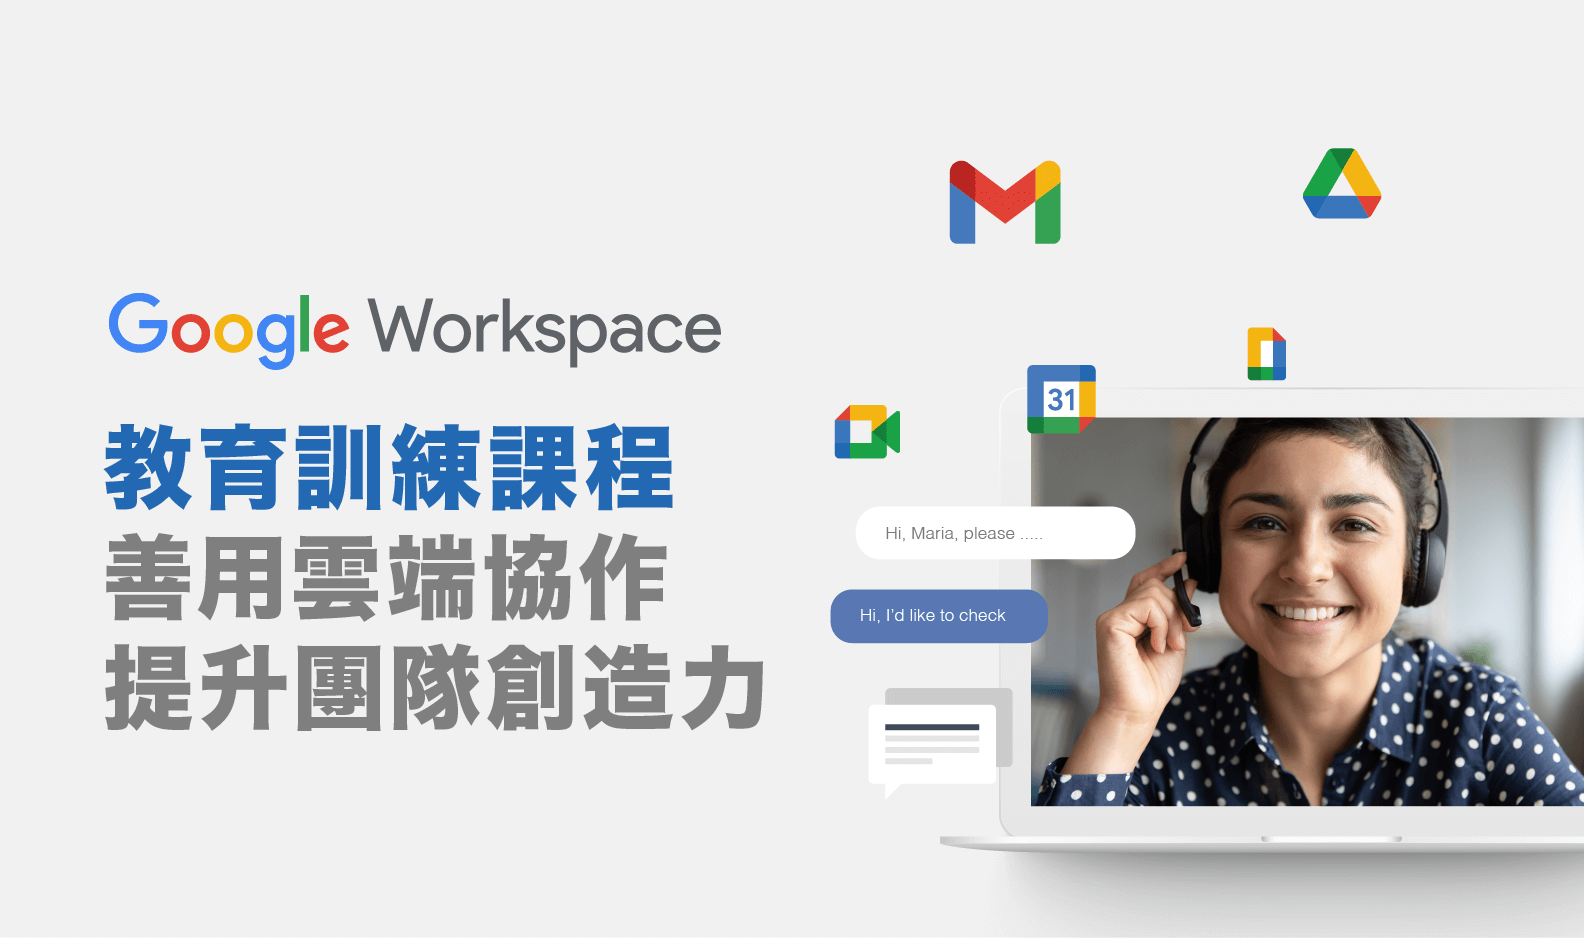 Google Workspace 教育訓練課程 | 善用雲端協作、提升團隊創造力 - 羽昇國際